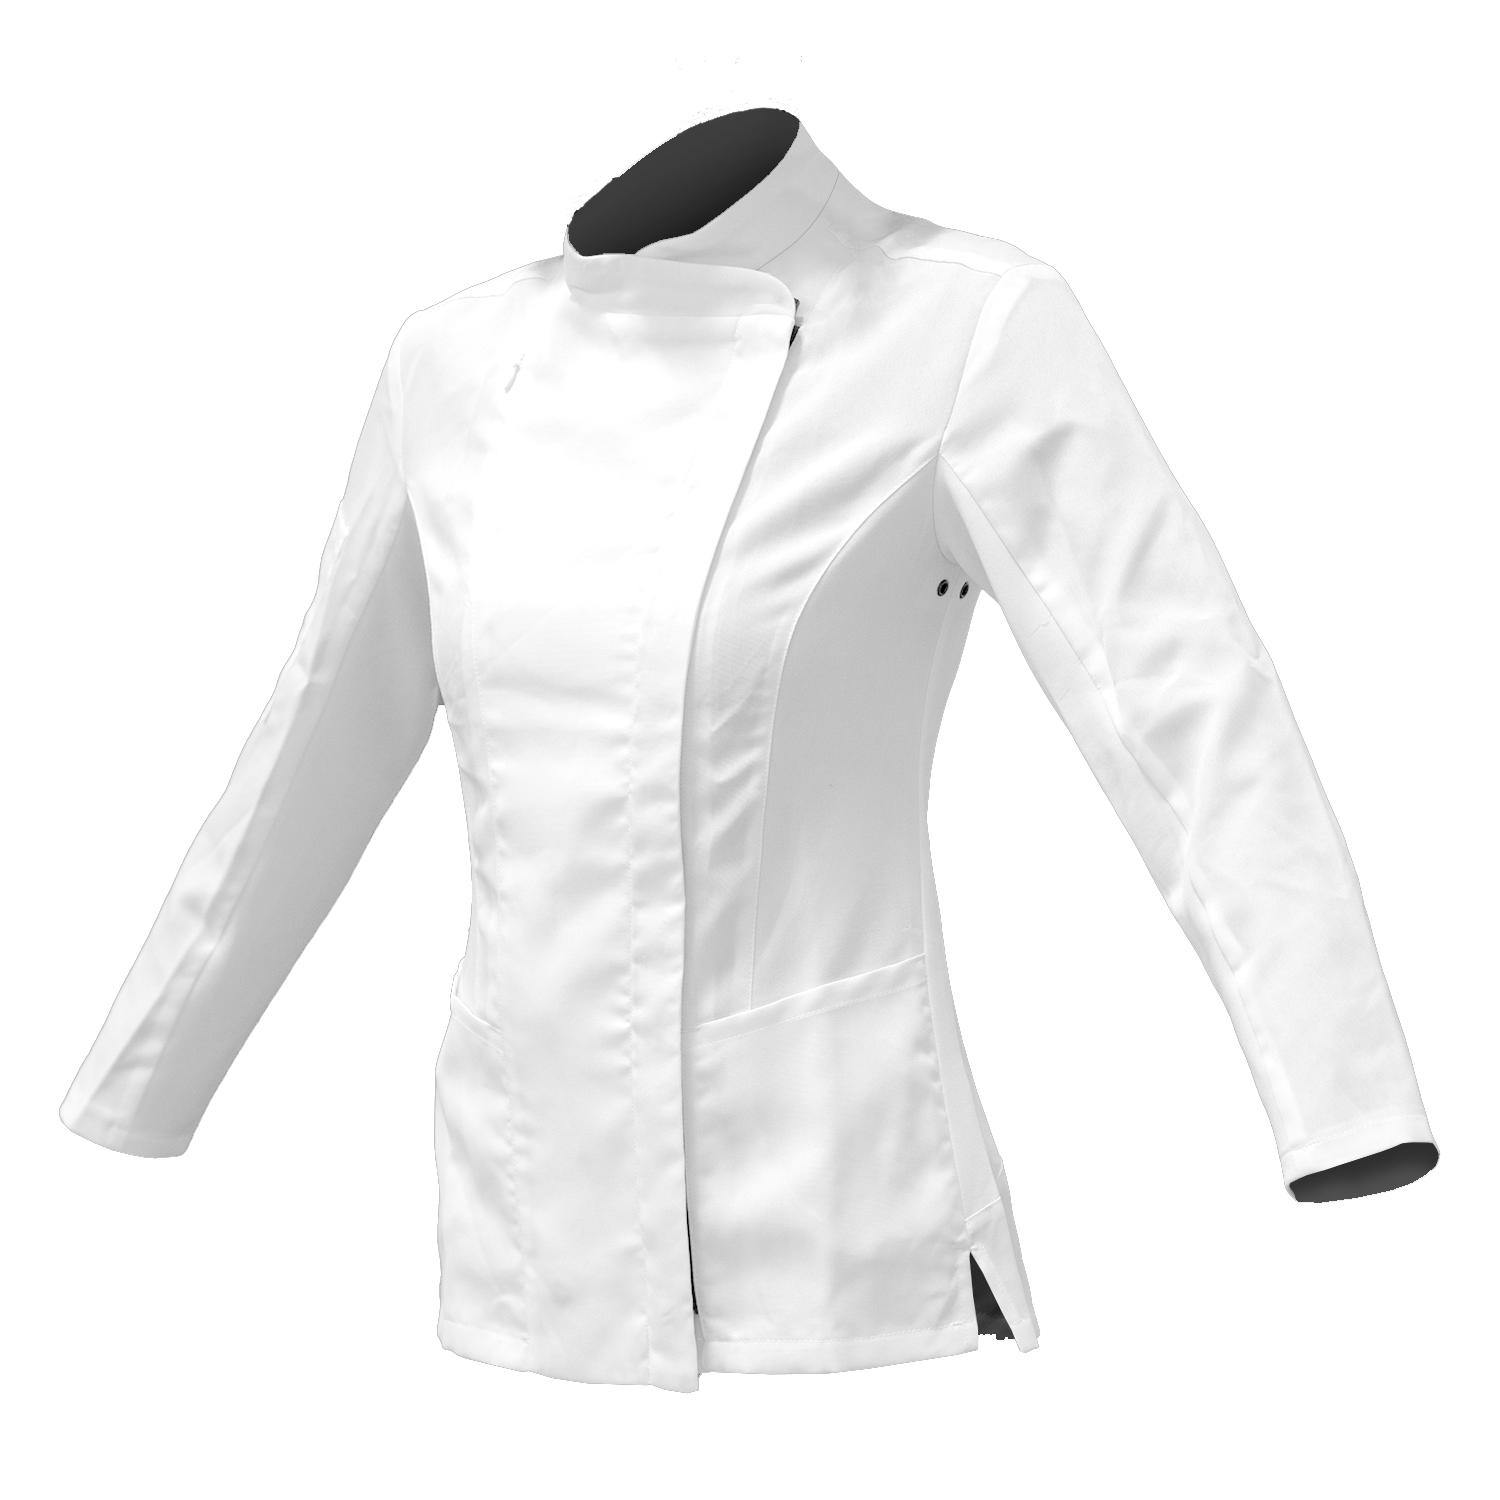 YellowJacket Chefwear Womens Chefwear White Long Sleeve Coat Jacket Ladies Female Chef Wear Uniform